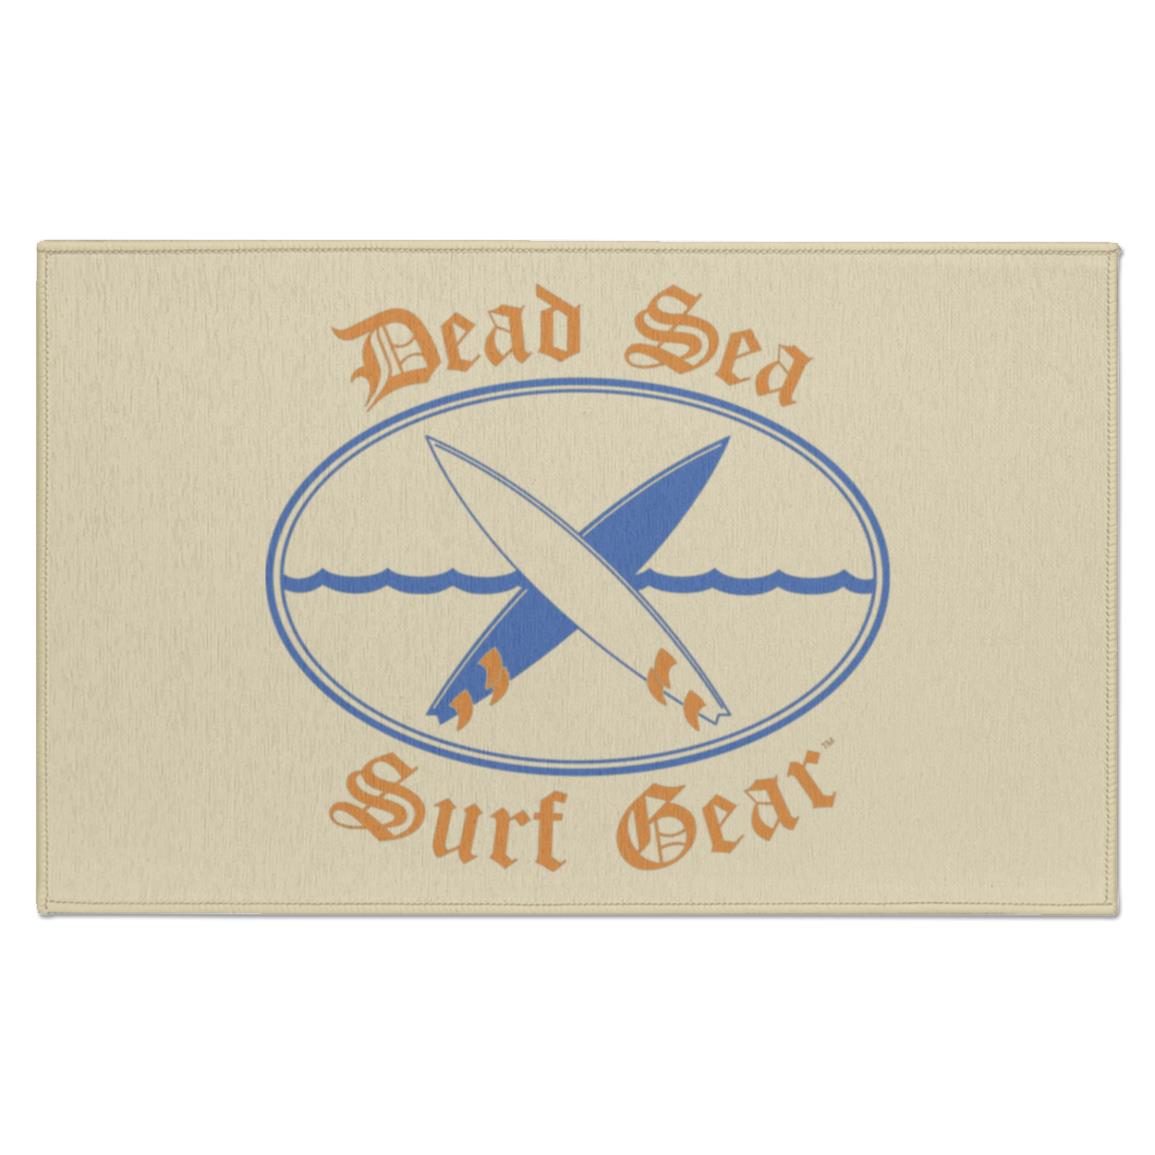 Dead Sea Surf Gear Indoor Doormat